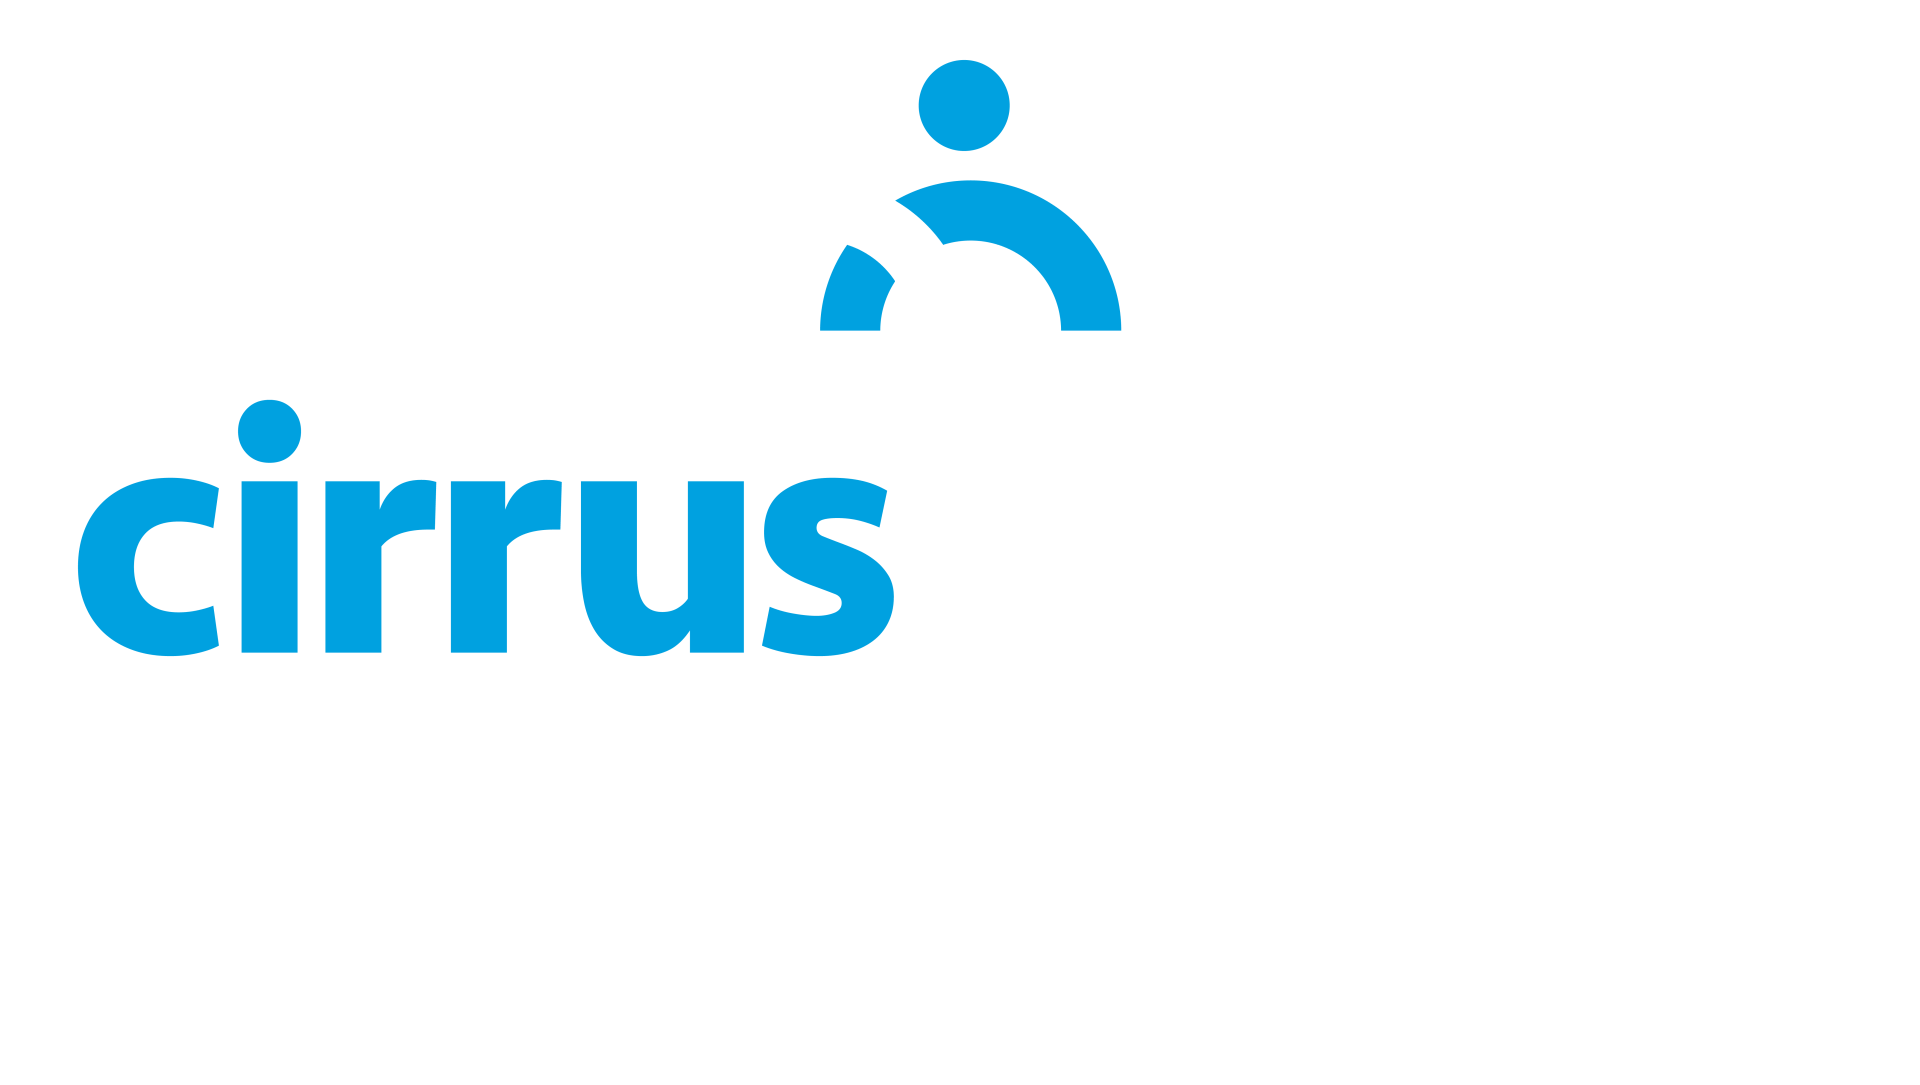 Cirrus Global Inc. Overseas Recruitment